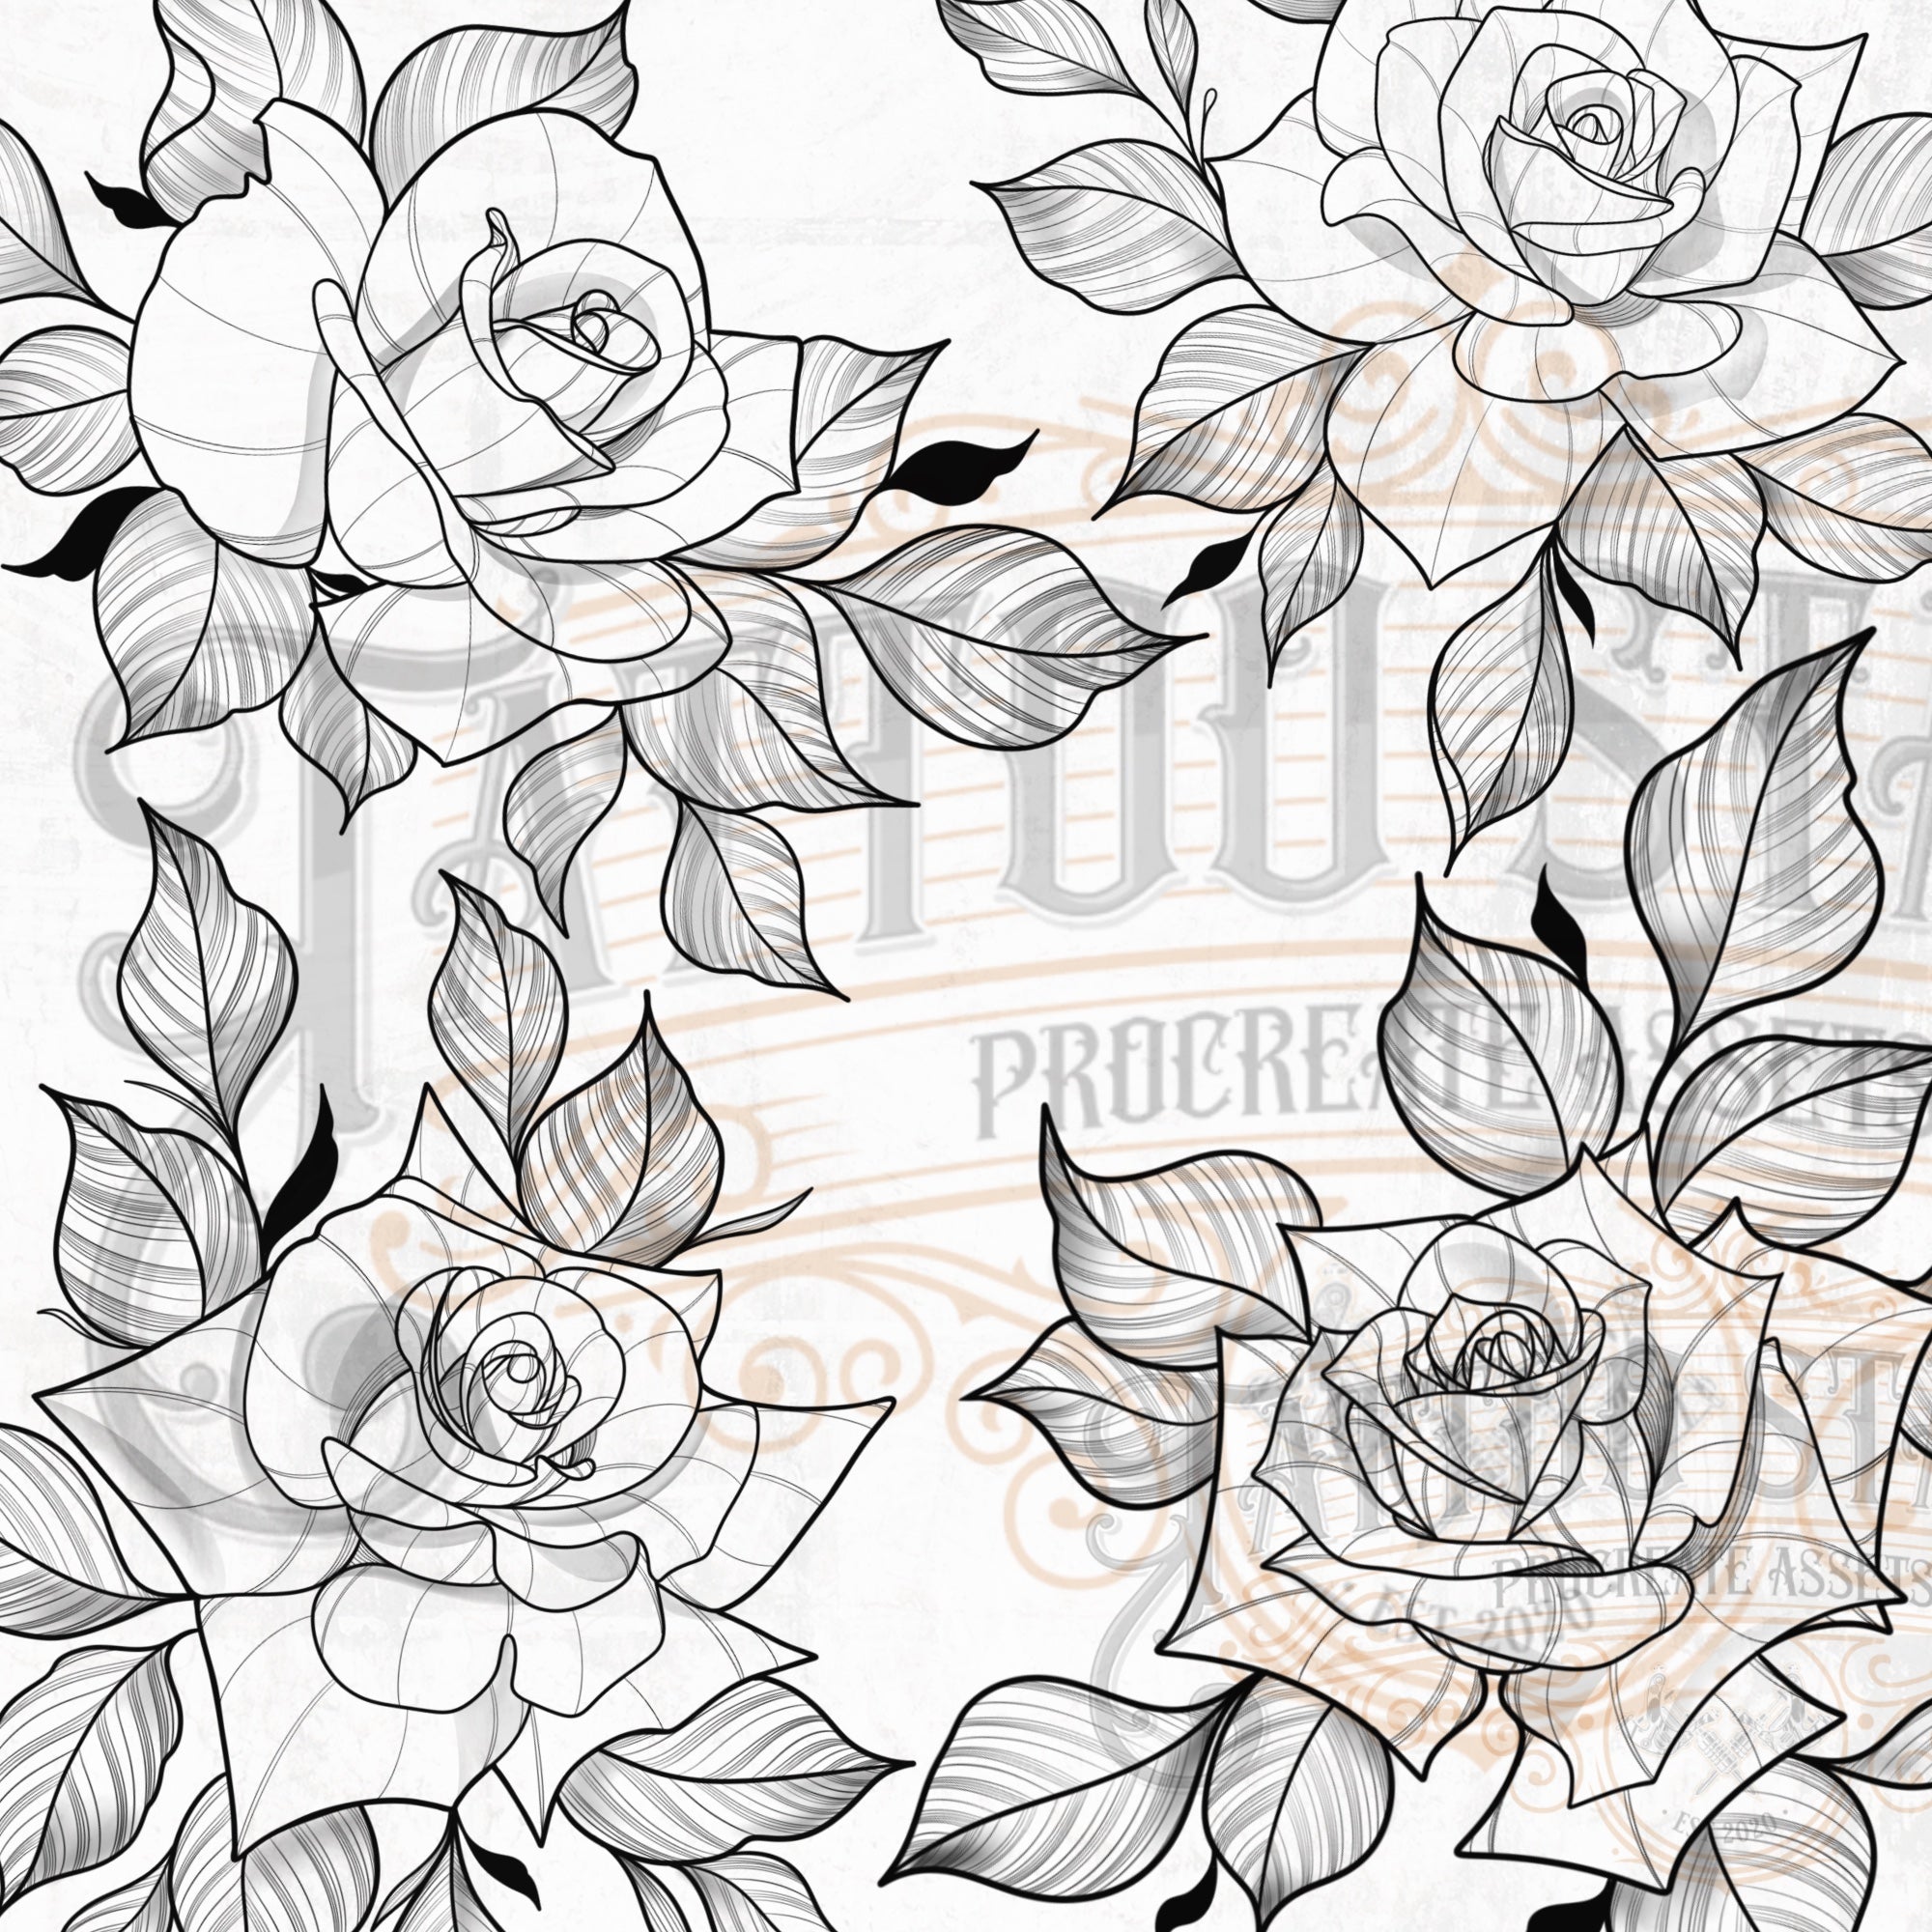 Black Rose Tattoo Design Download High Resolution Digital Art PNG  Transparent Background Printable SVG Tattoo Stencil - Etsy